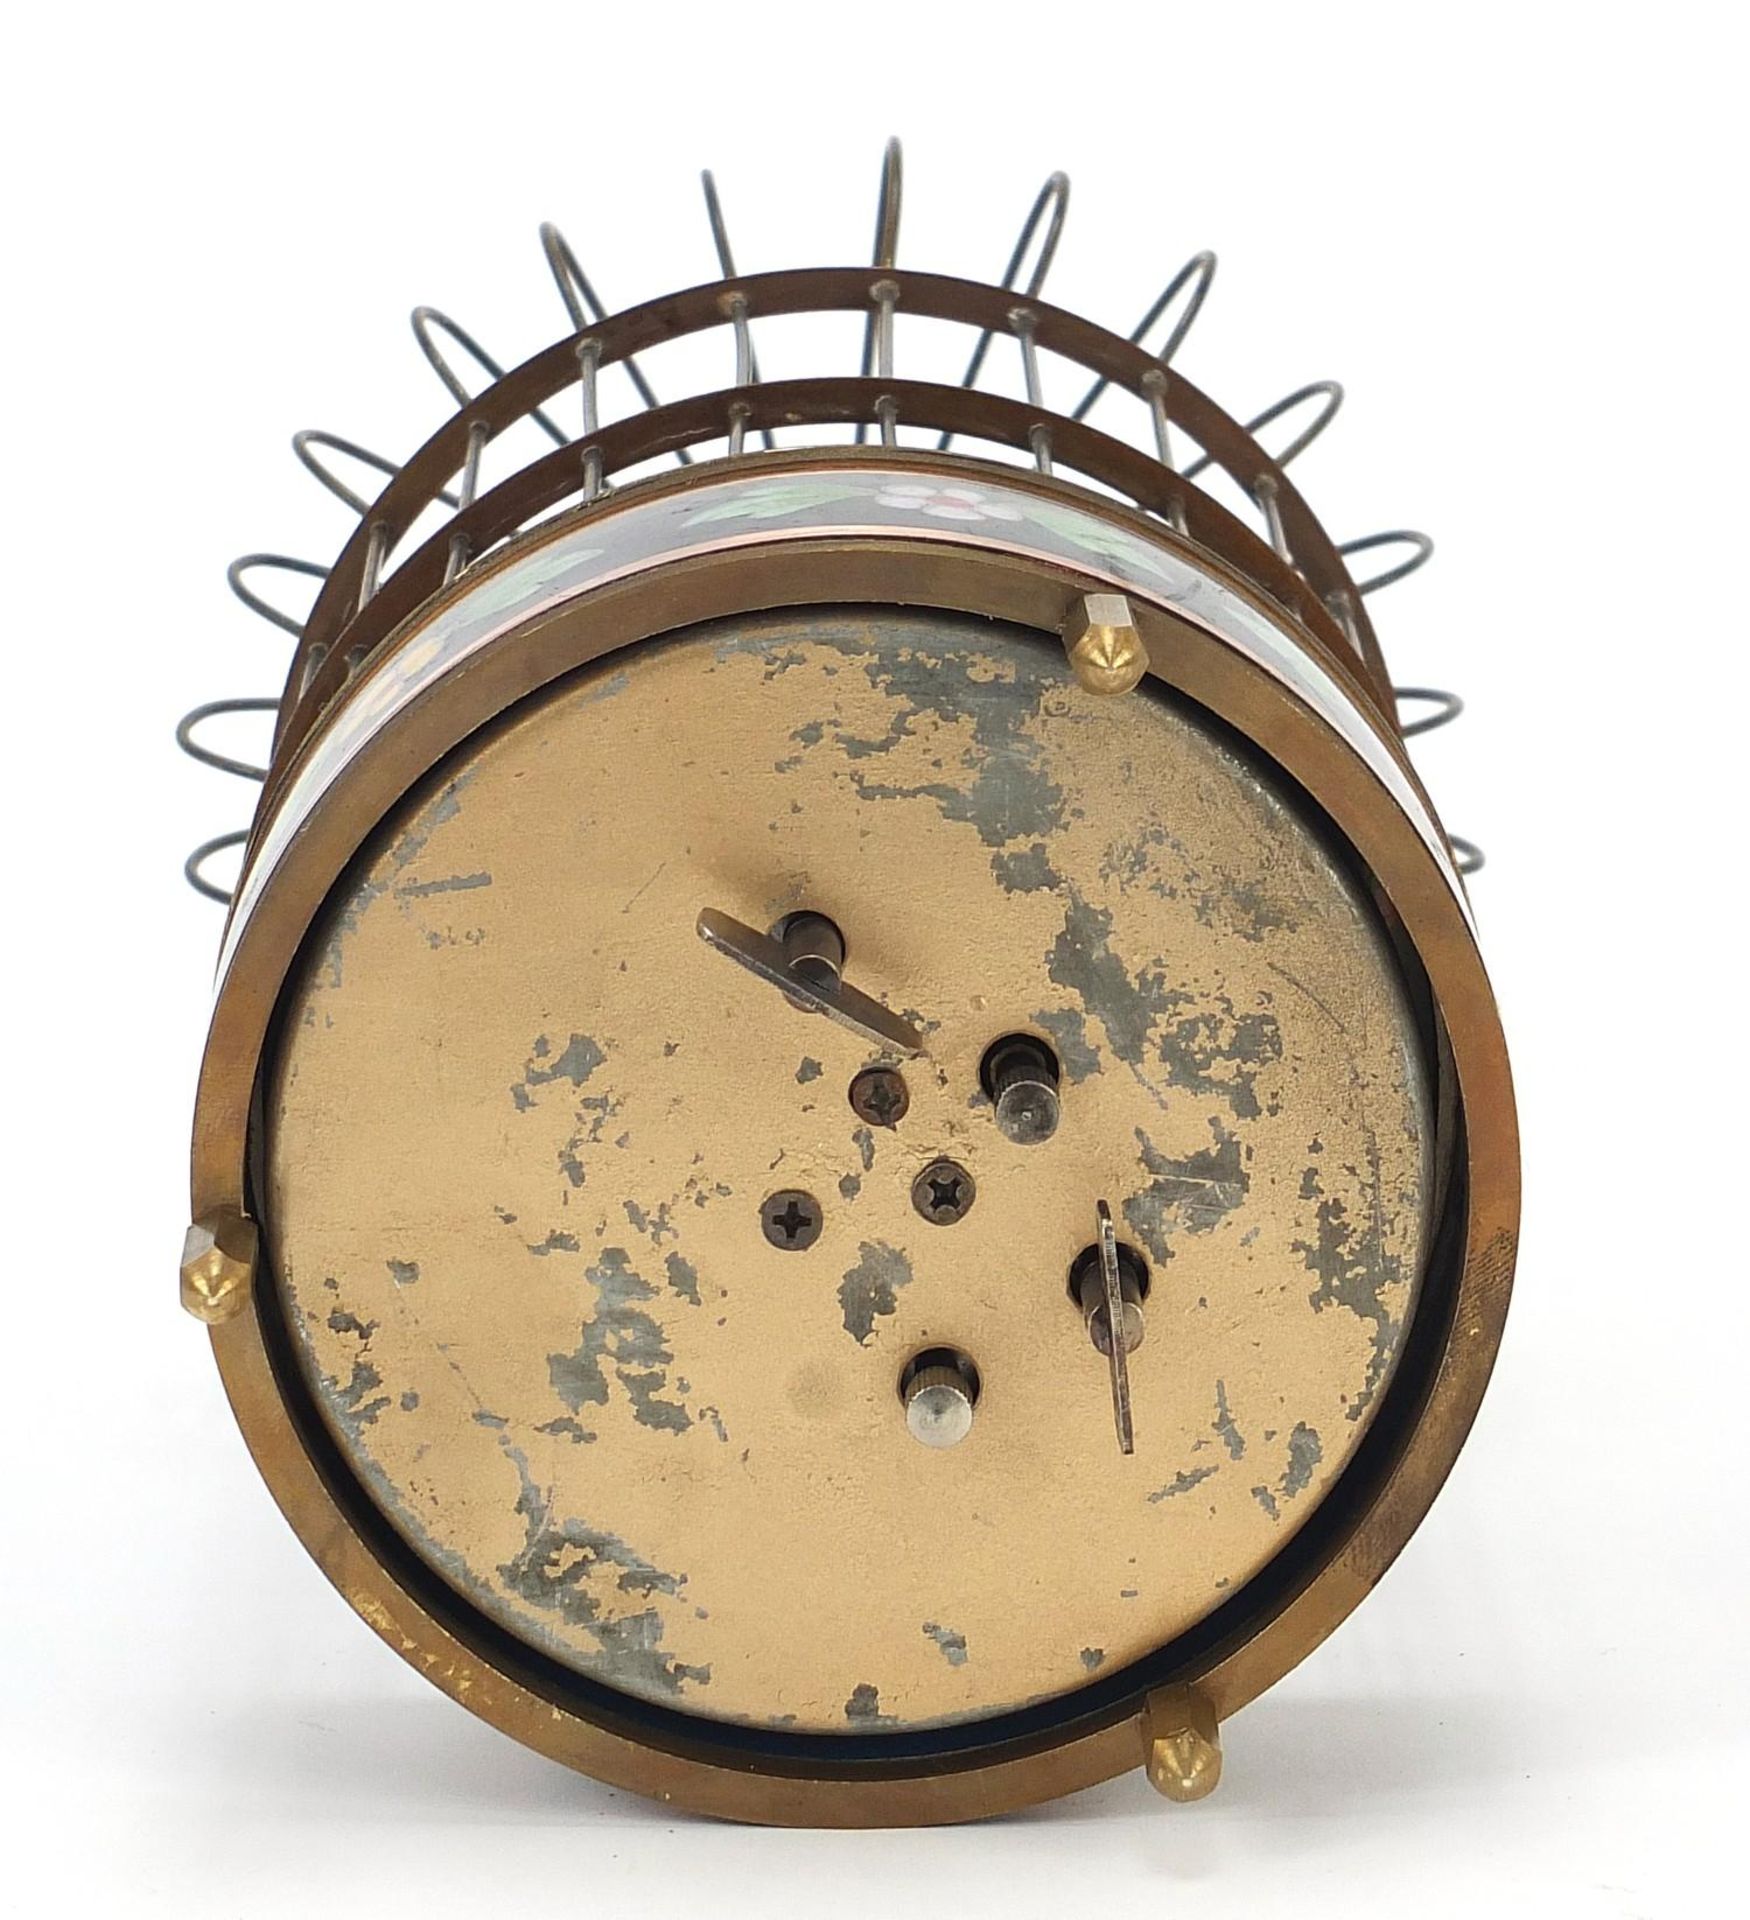 Brass clockwork automaton bird cage alarm clock with cloisonné band, 19.5cm high - Image 4 of 4